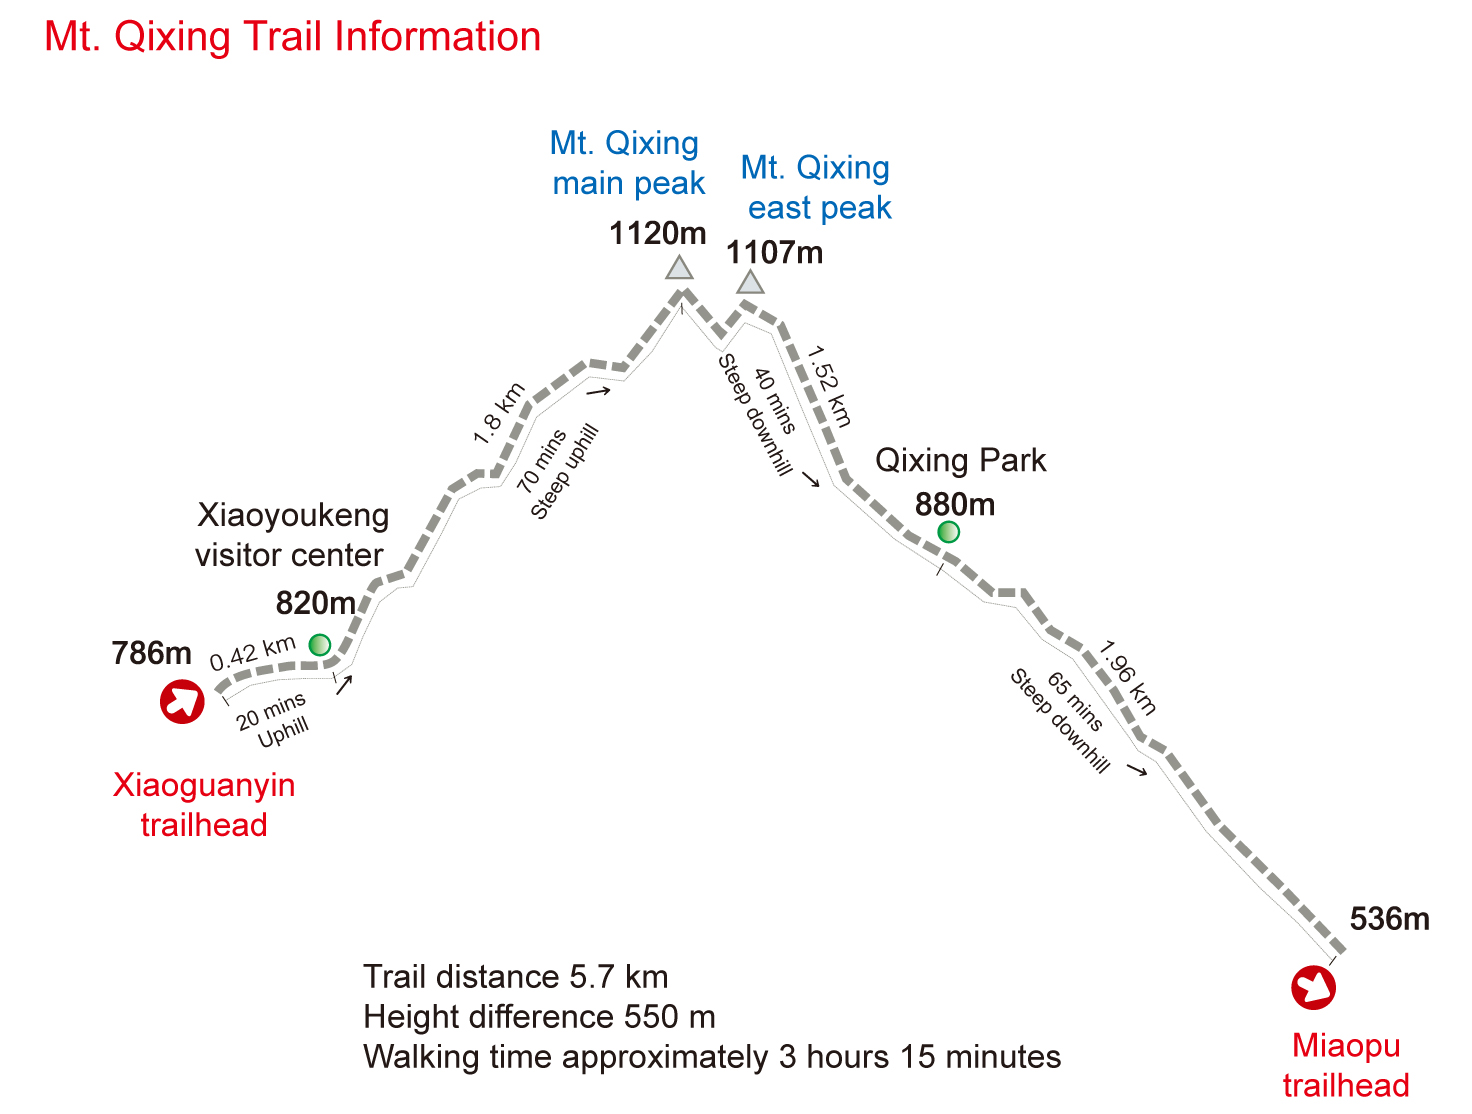 Mt. Qixing Main Peak - East Peak Trail Drop map